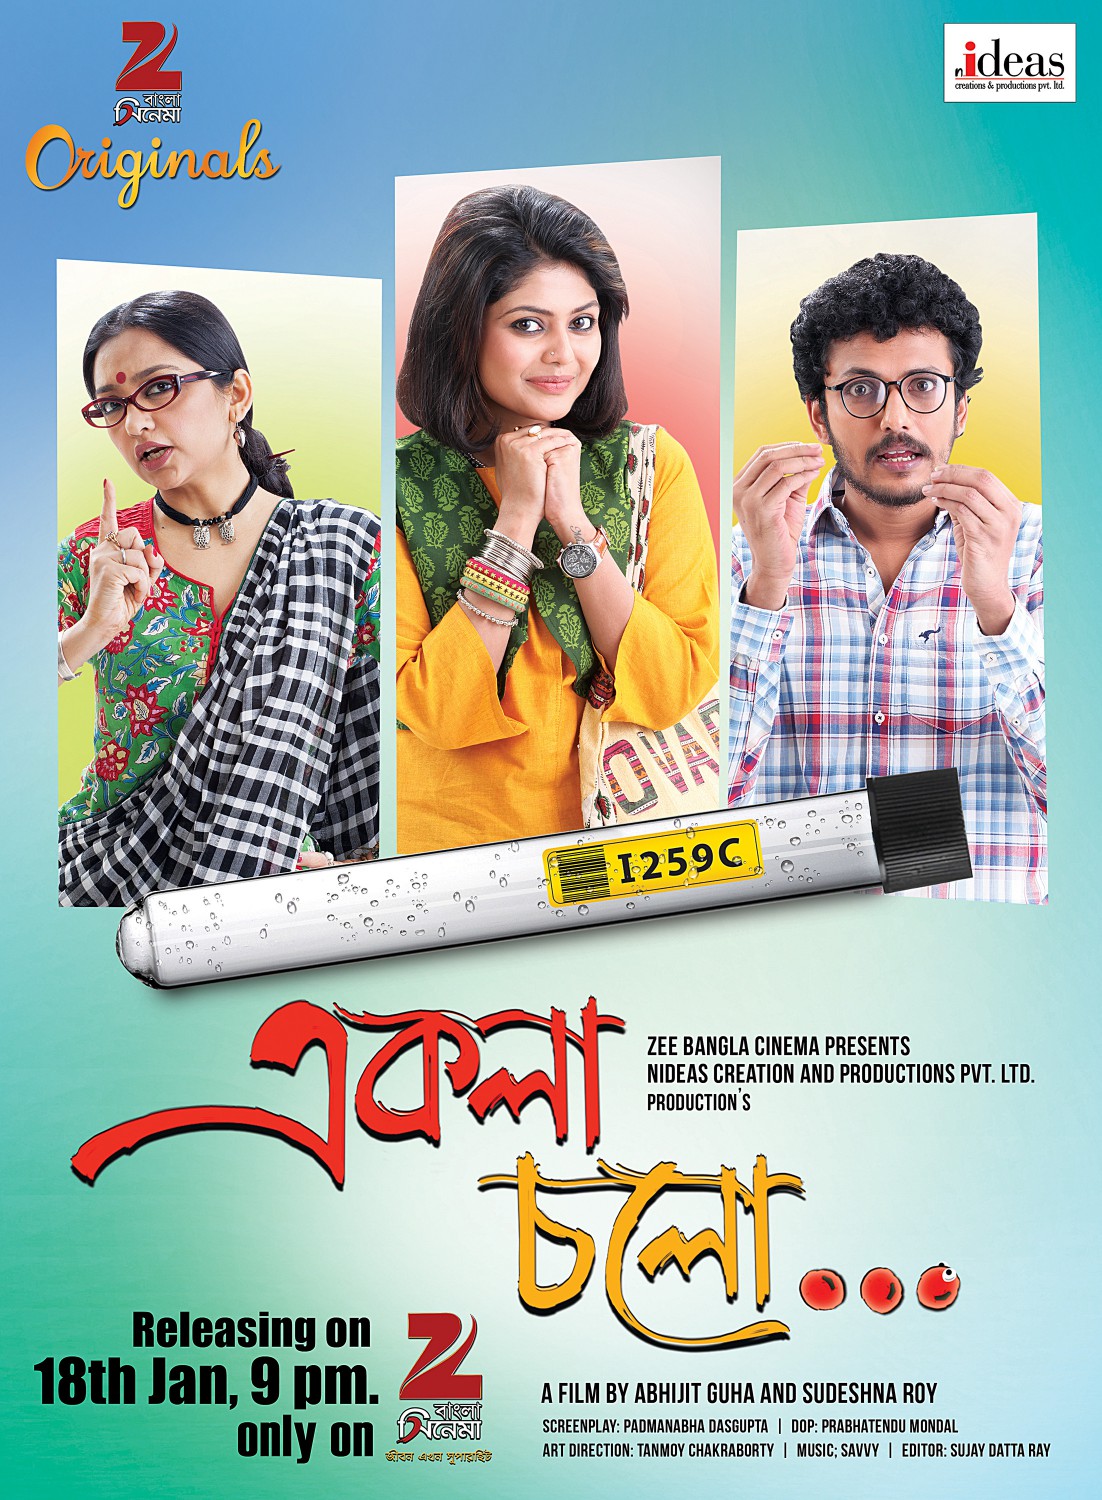 Extra Large TV Poster Image for Ekla Cholo 